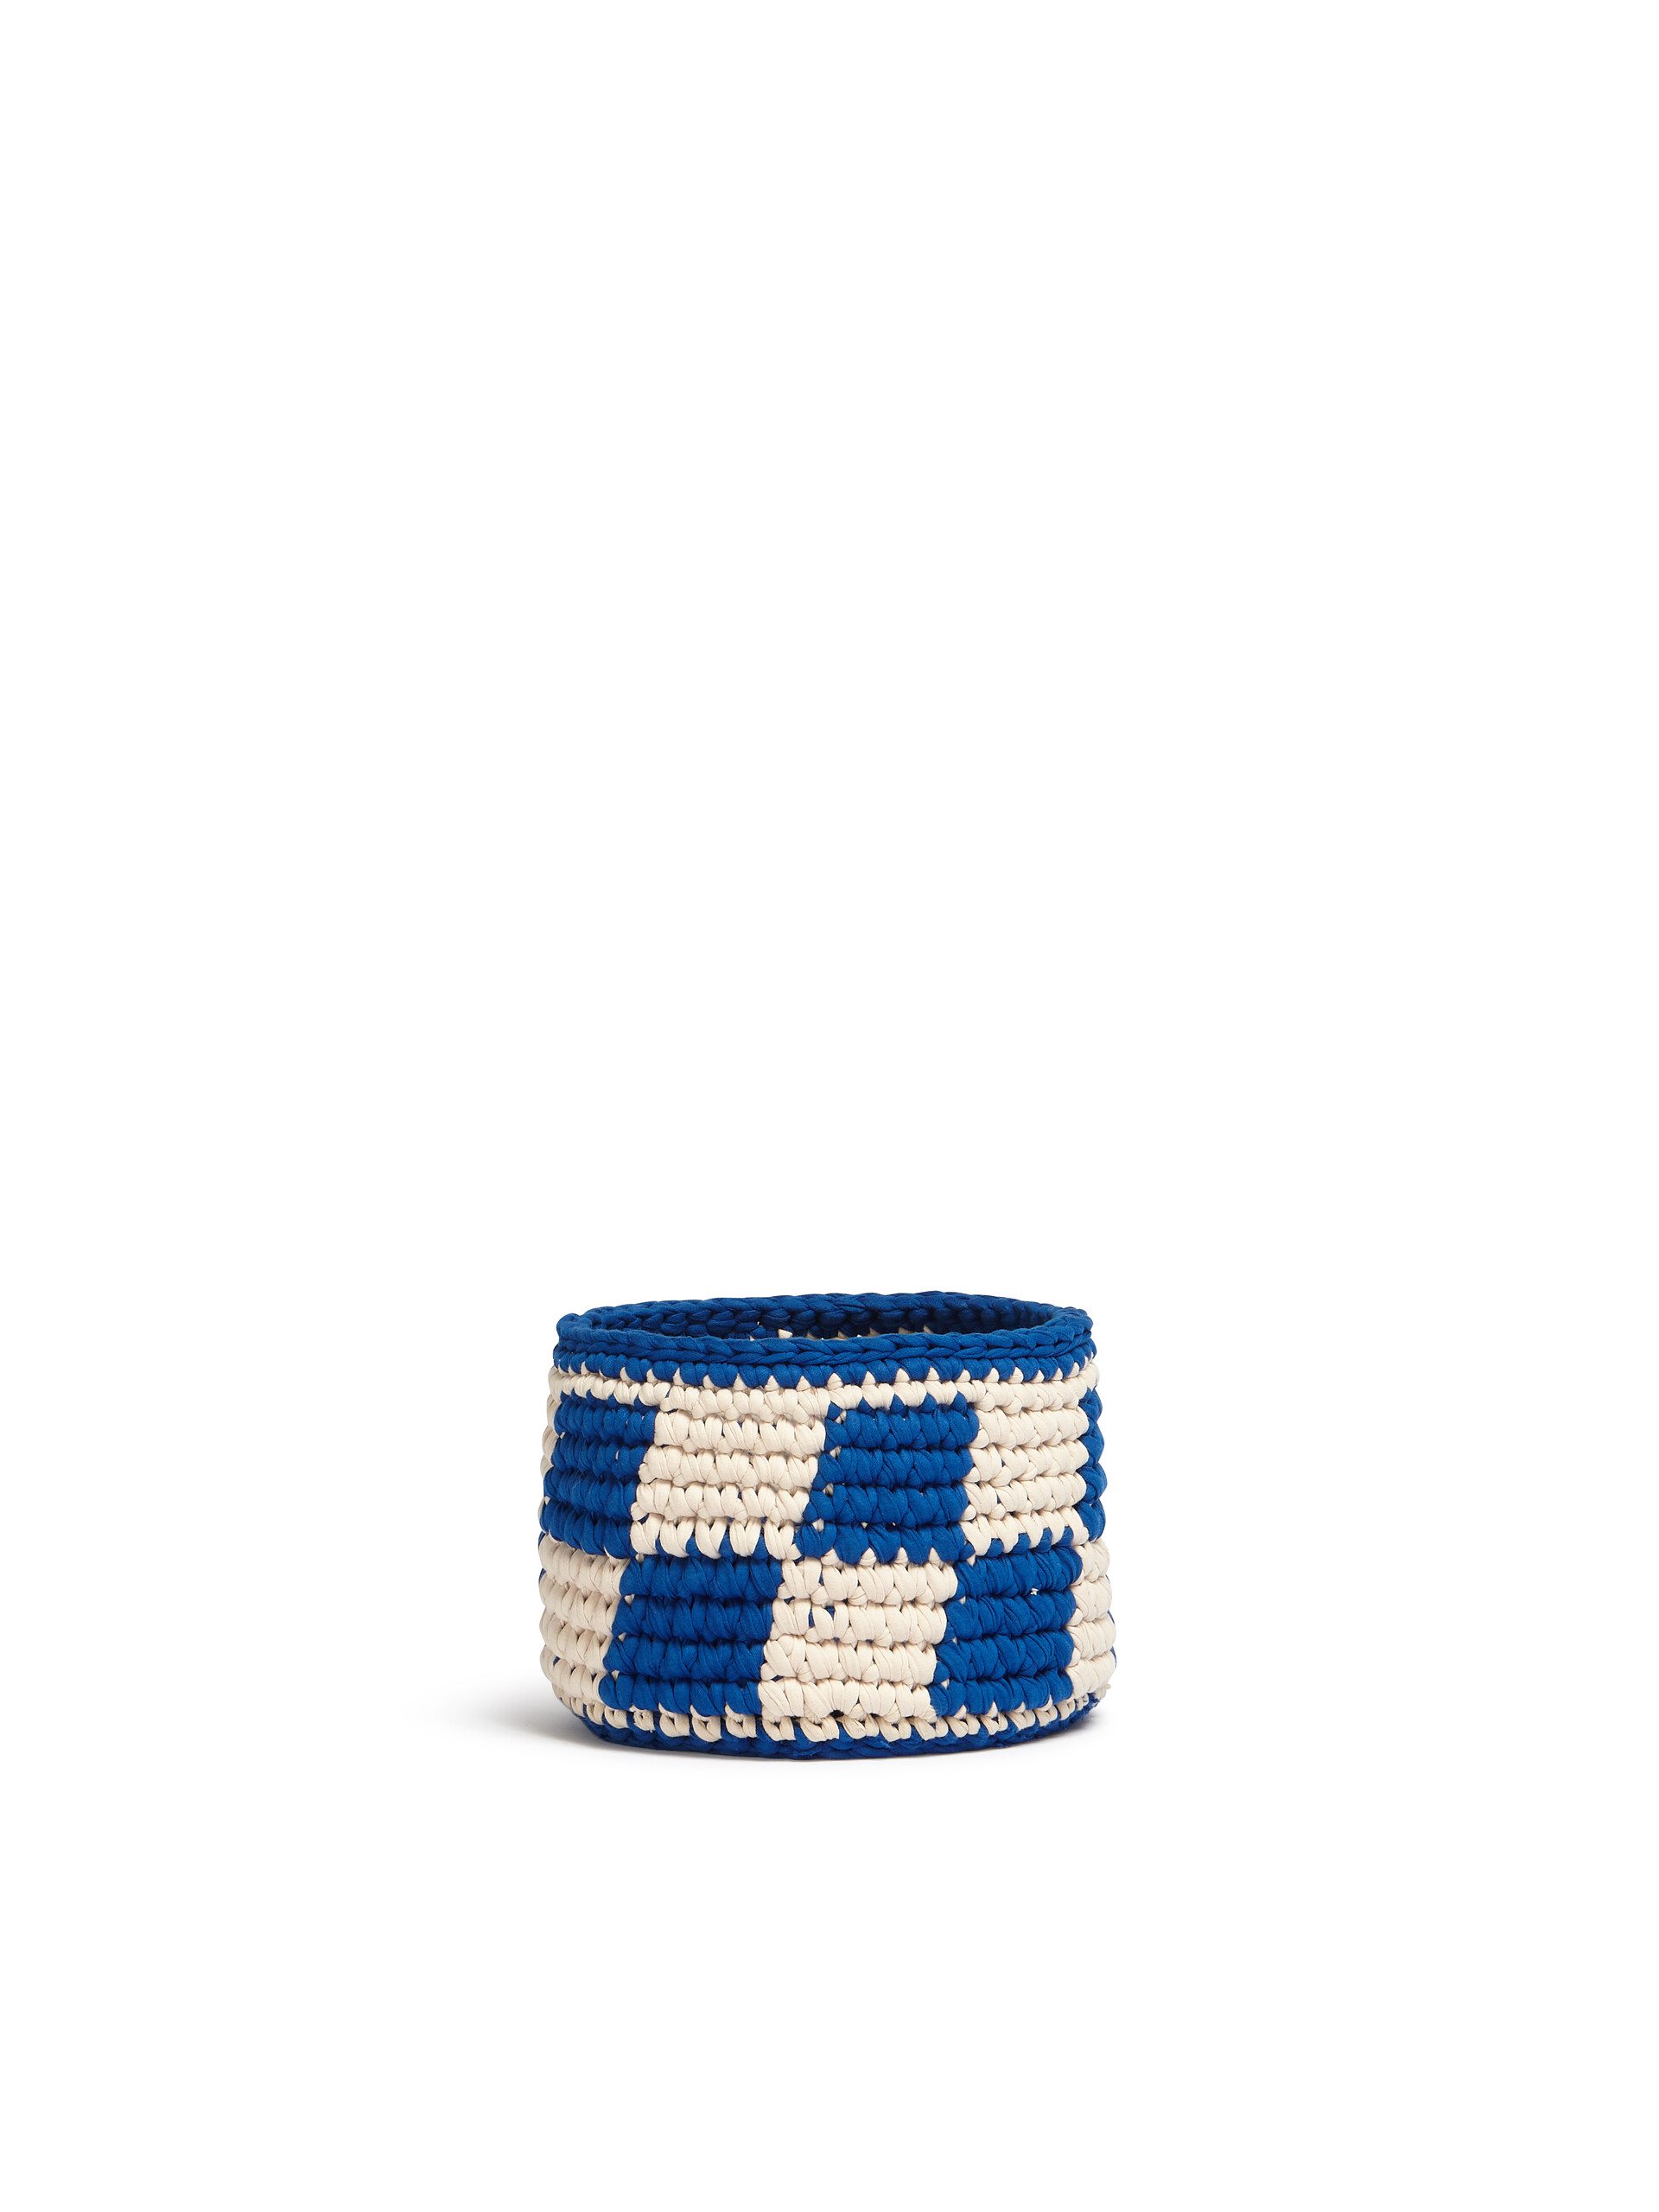 Small MARNI MARKET vase holder in white and blue crochet - Furniture - Image 2